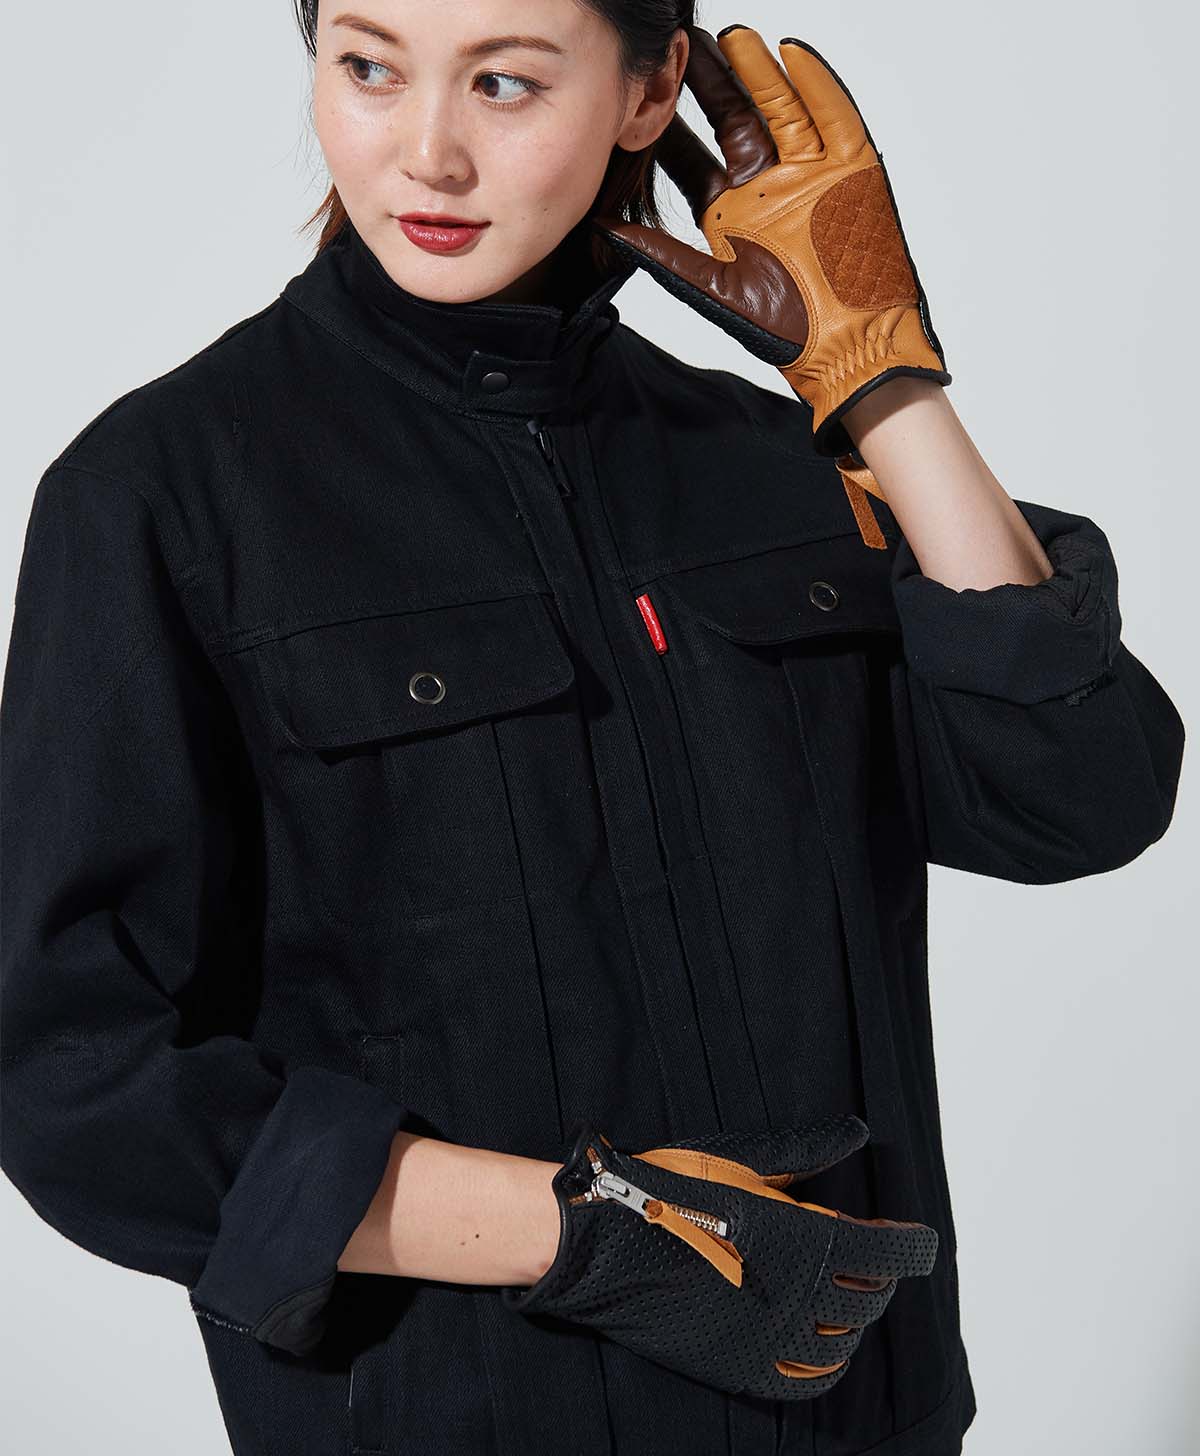 Glove Rox -PL / Negro / Marrón (mujer)